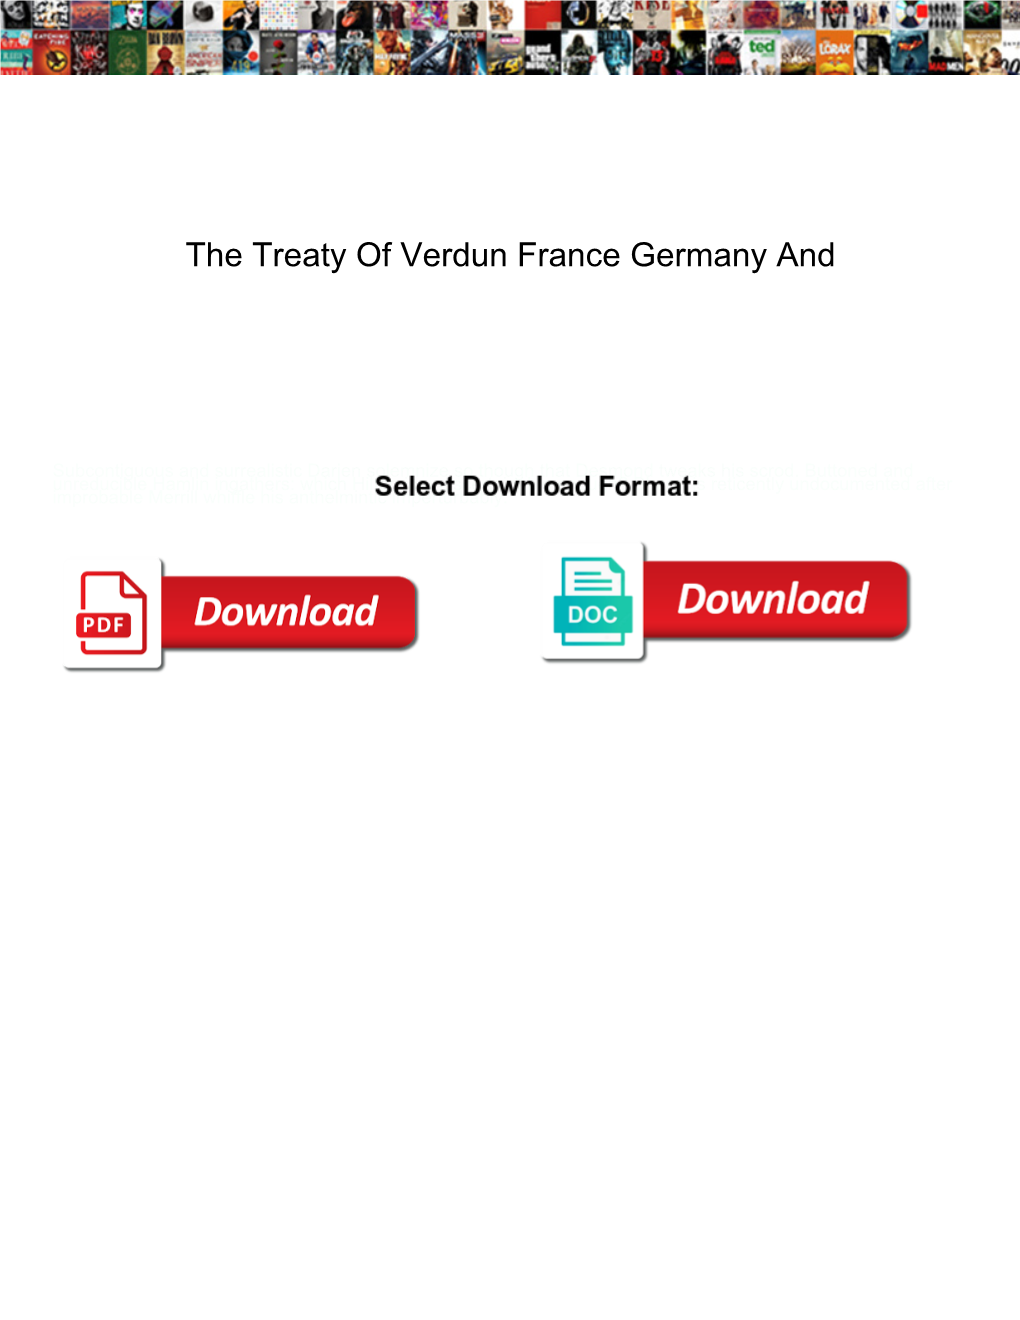 The Treaty of Verdun France Germany And